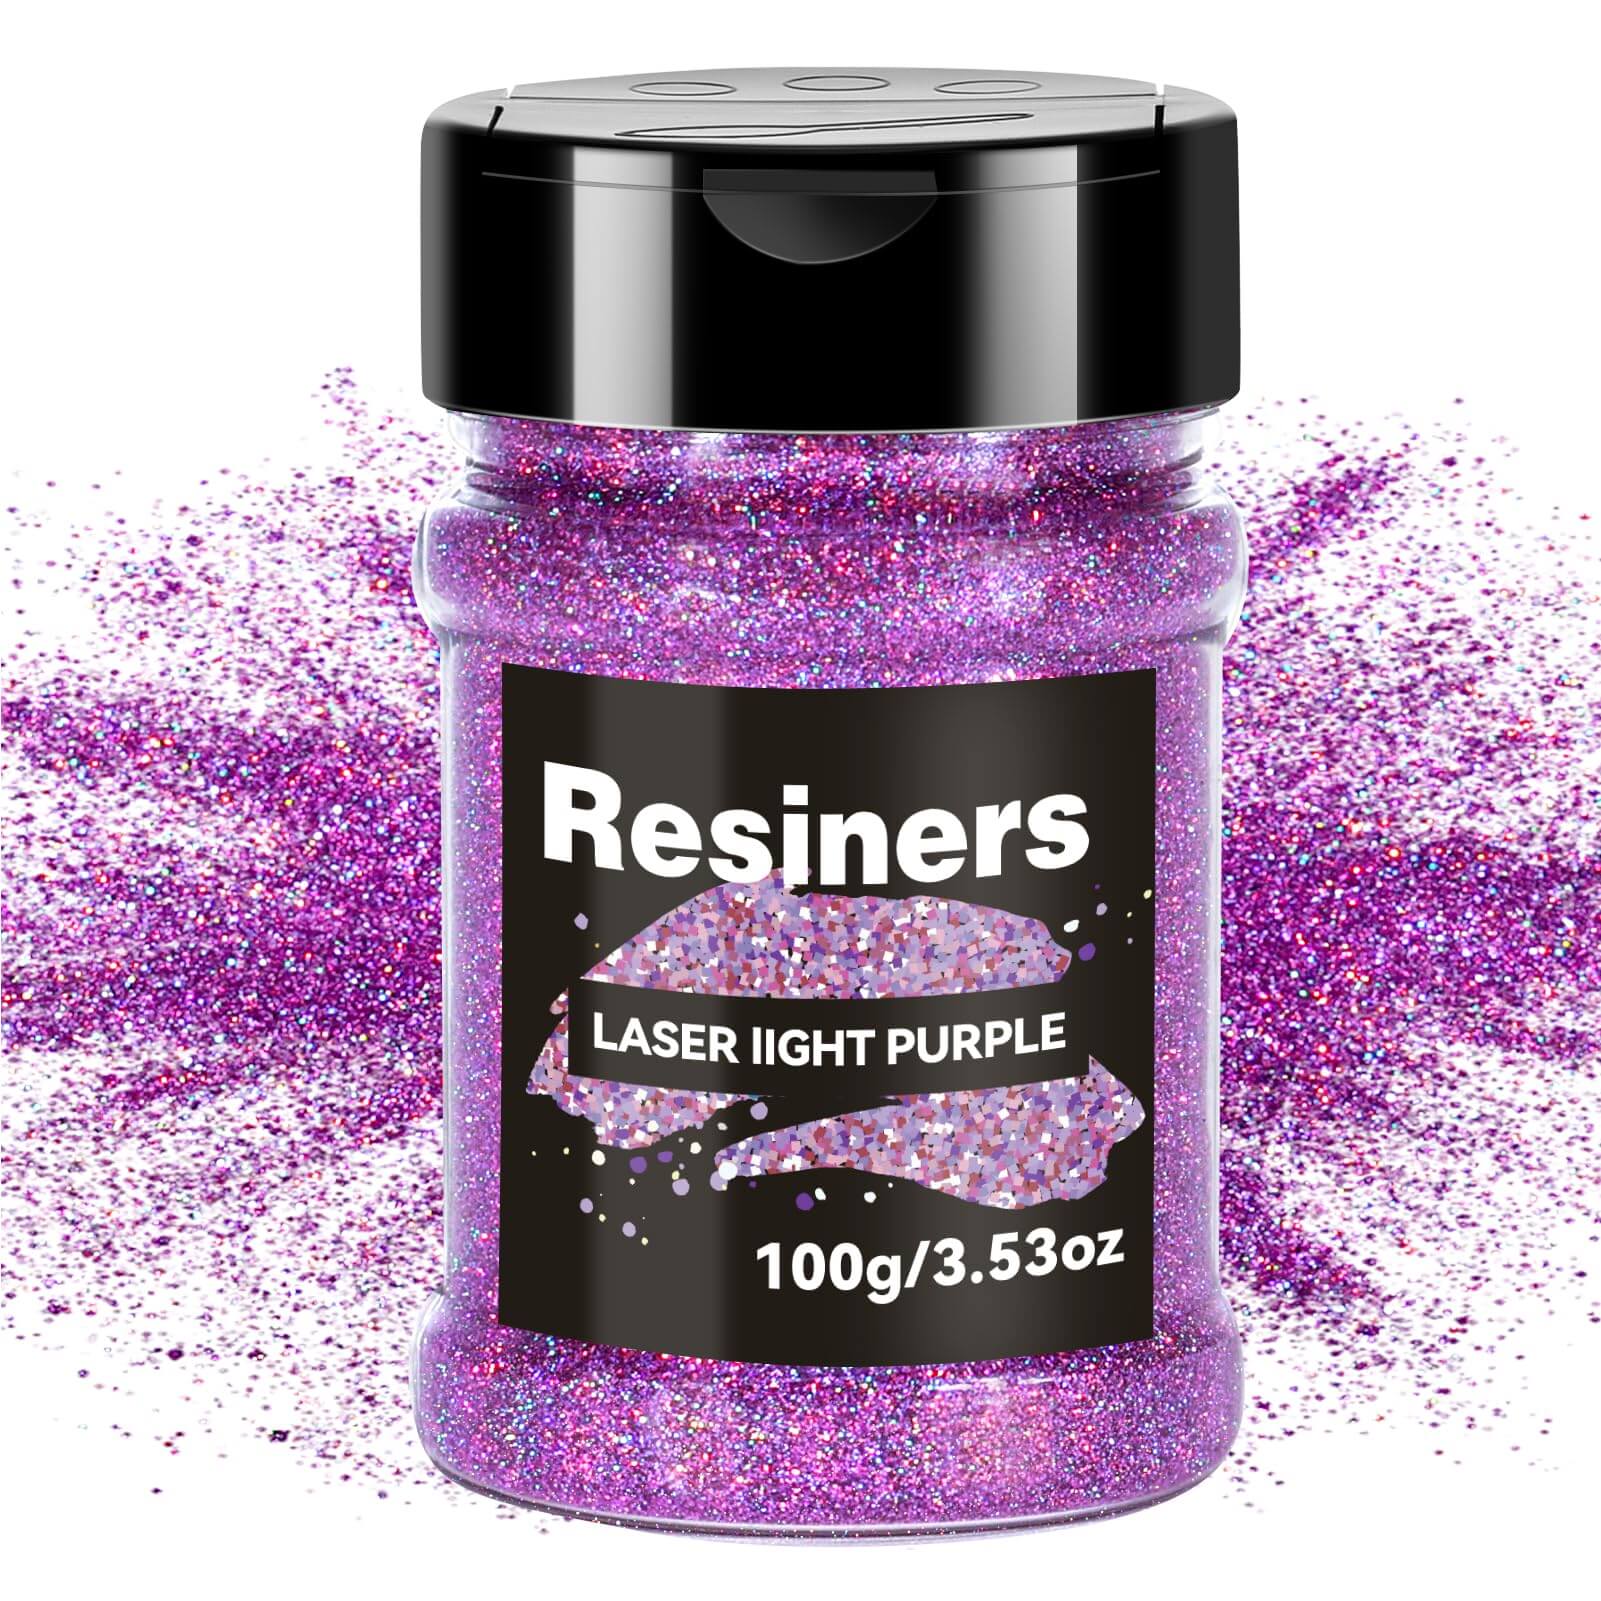 Fine Glitter Powder - PINK SAPPHIRE - 80g — BALTIC DAY